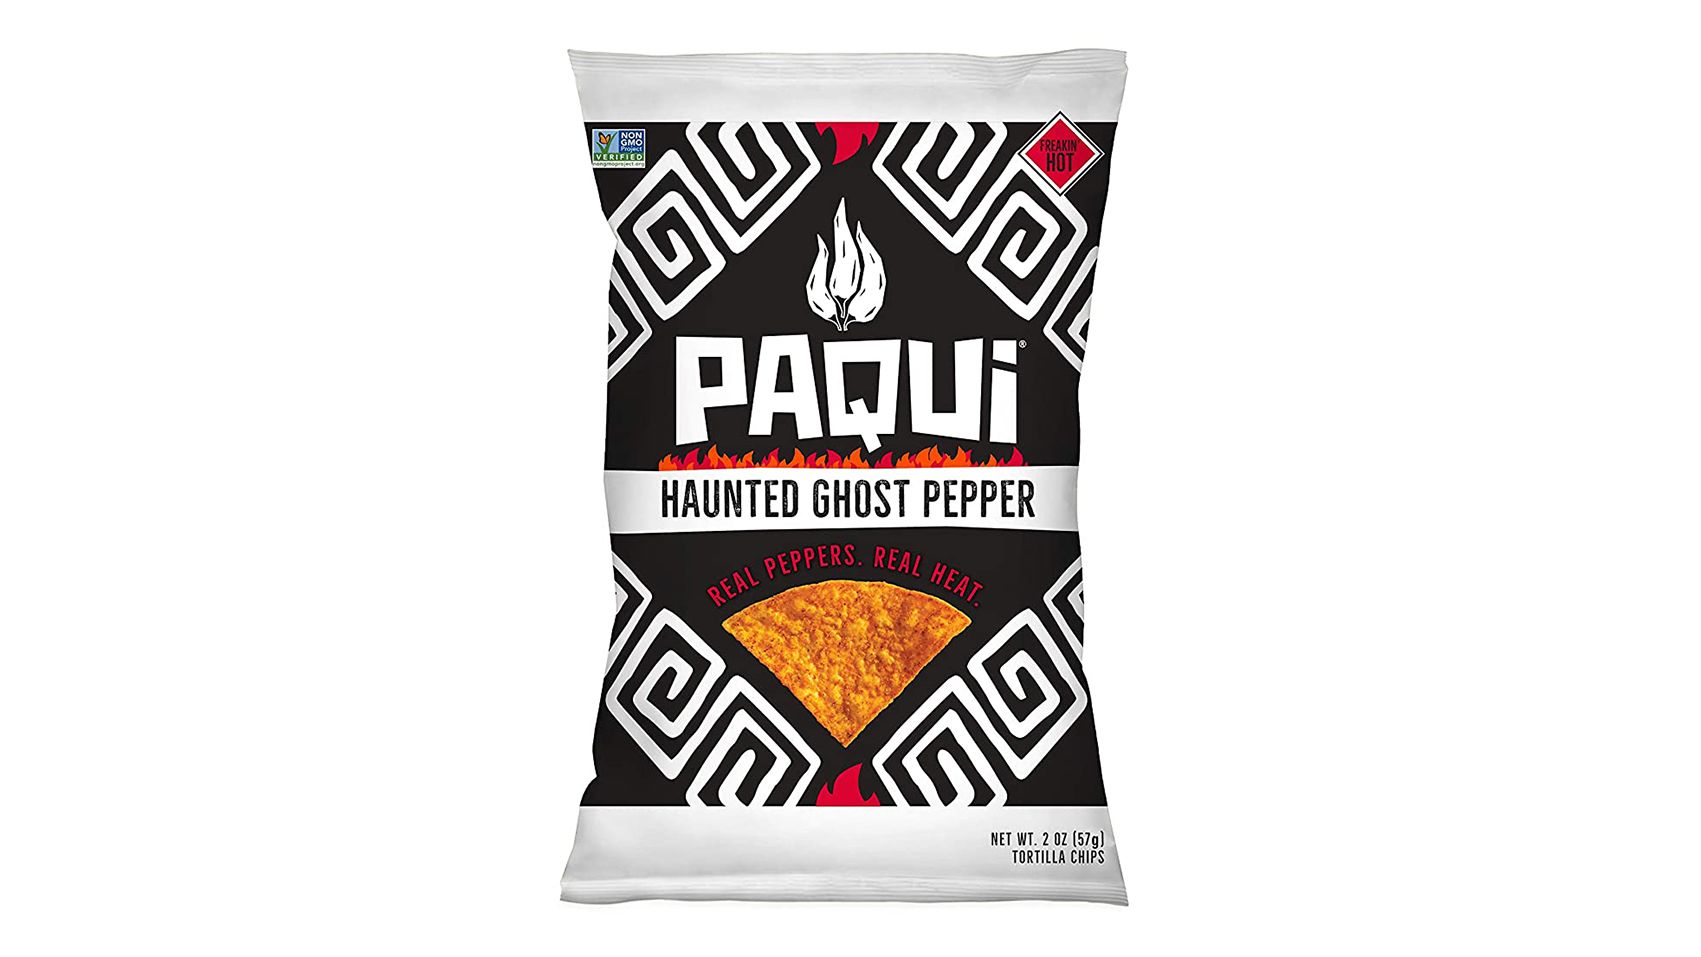 https://media.cnn.com/api/v1/images/stellar/prod/210301150251-spicypaqui-haunted-ghost-pepper-spicy-hot-tortilla-chips.jpg?q=w_1701,h_957,x_0,y_0,c_fill